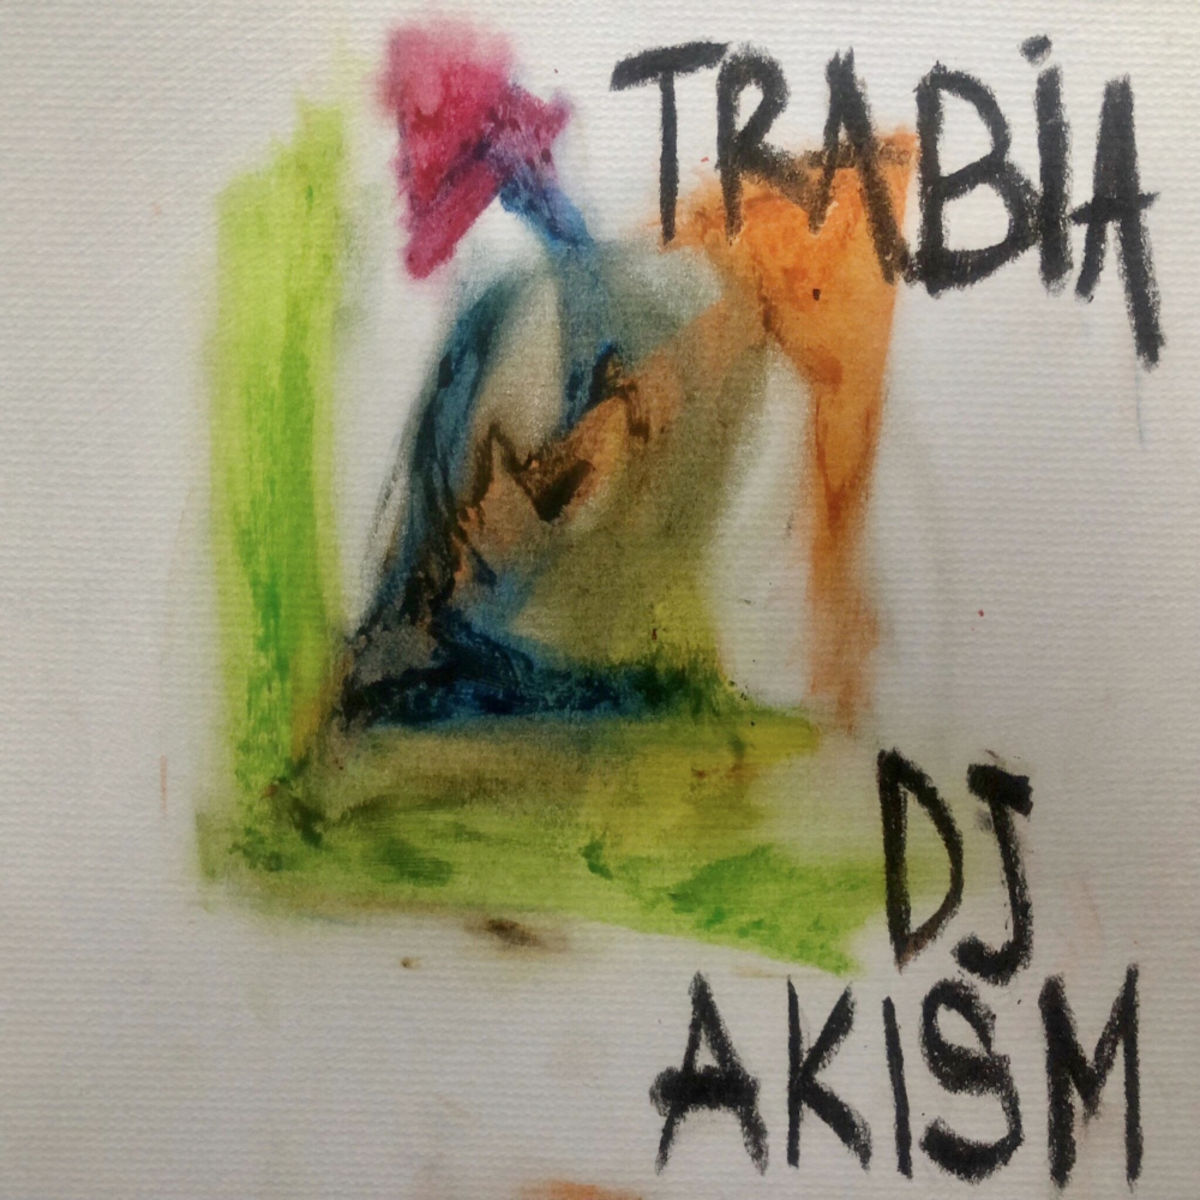 dj AkisM - Trabia / Visile Records